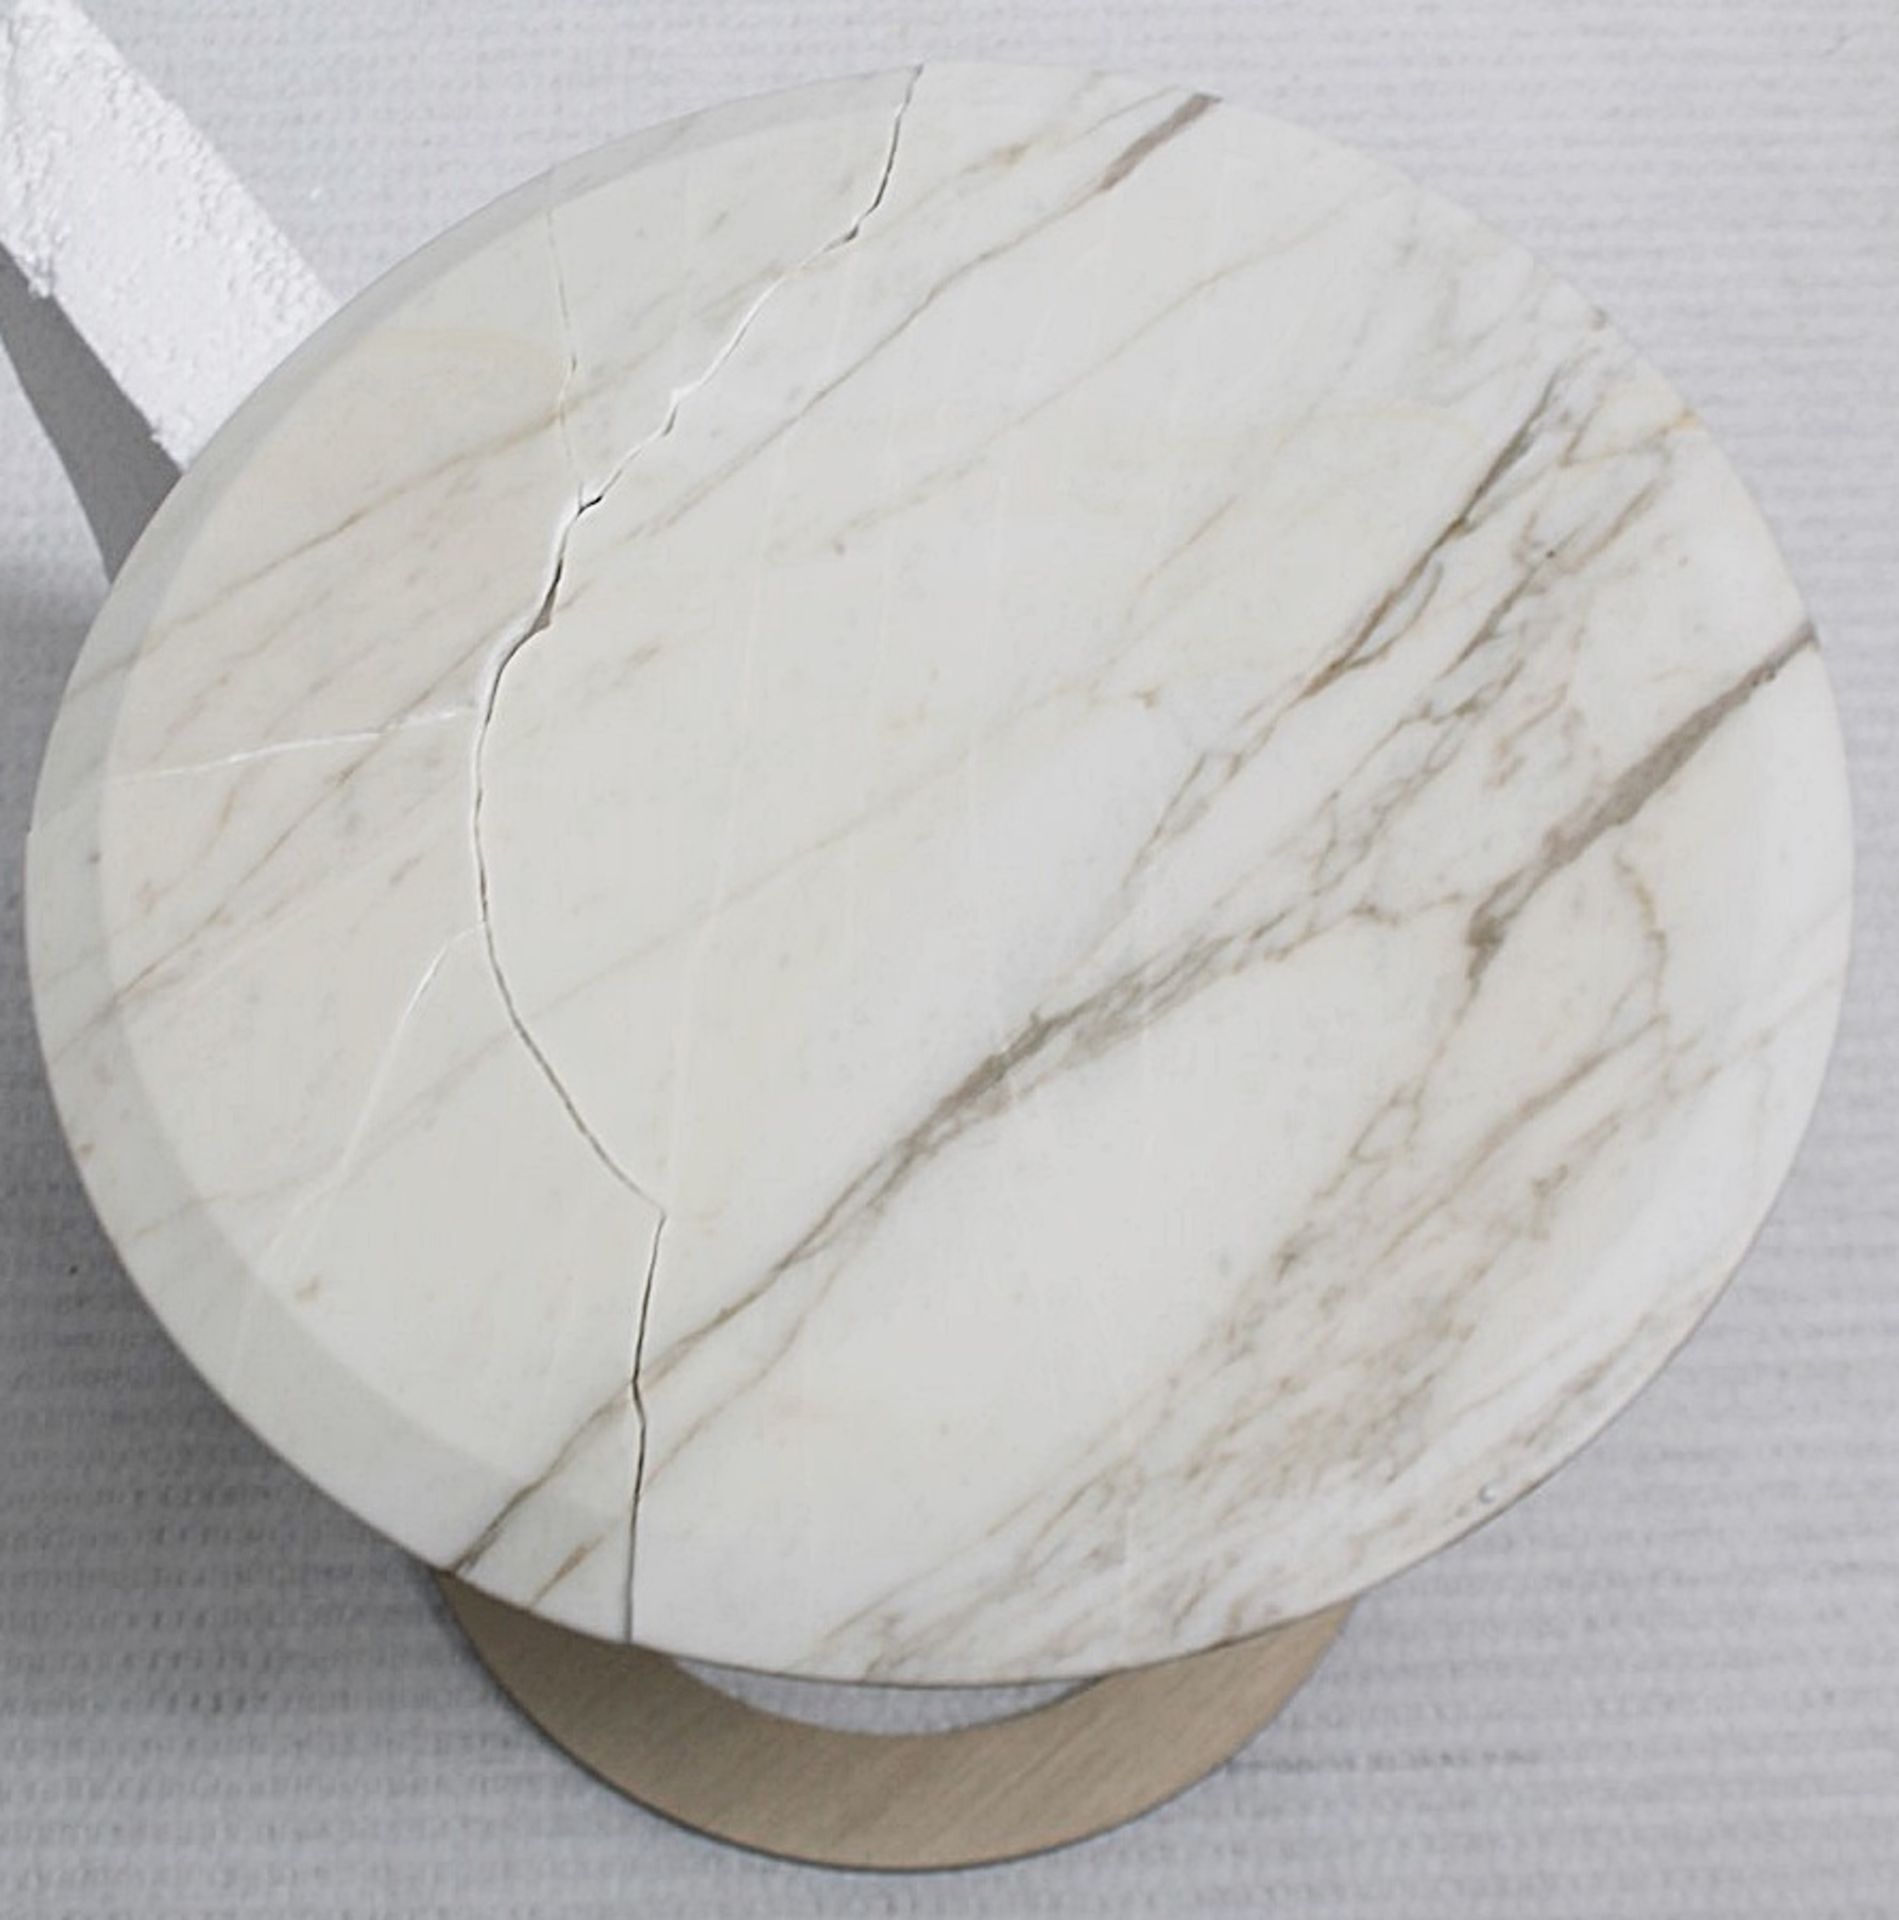 1 x POLTRONA FRAU 'JOK' Marble-Topped Round Luxury Designer Side Table - Original Price £1,285 - Image 4 of 8